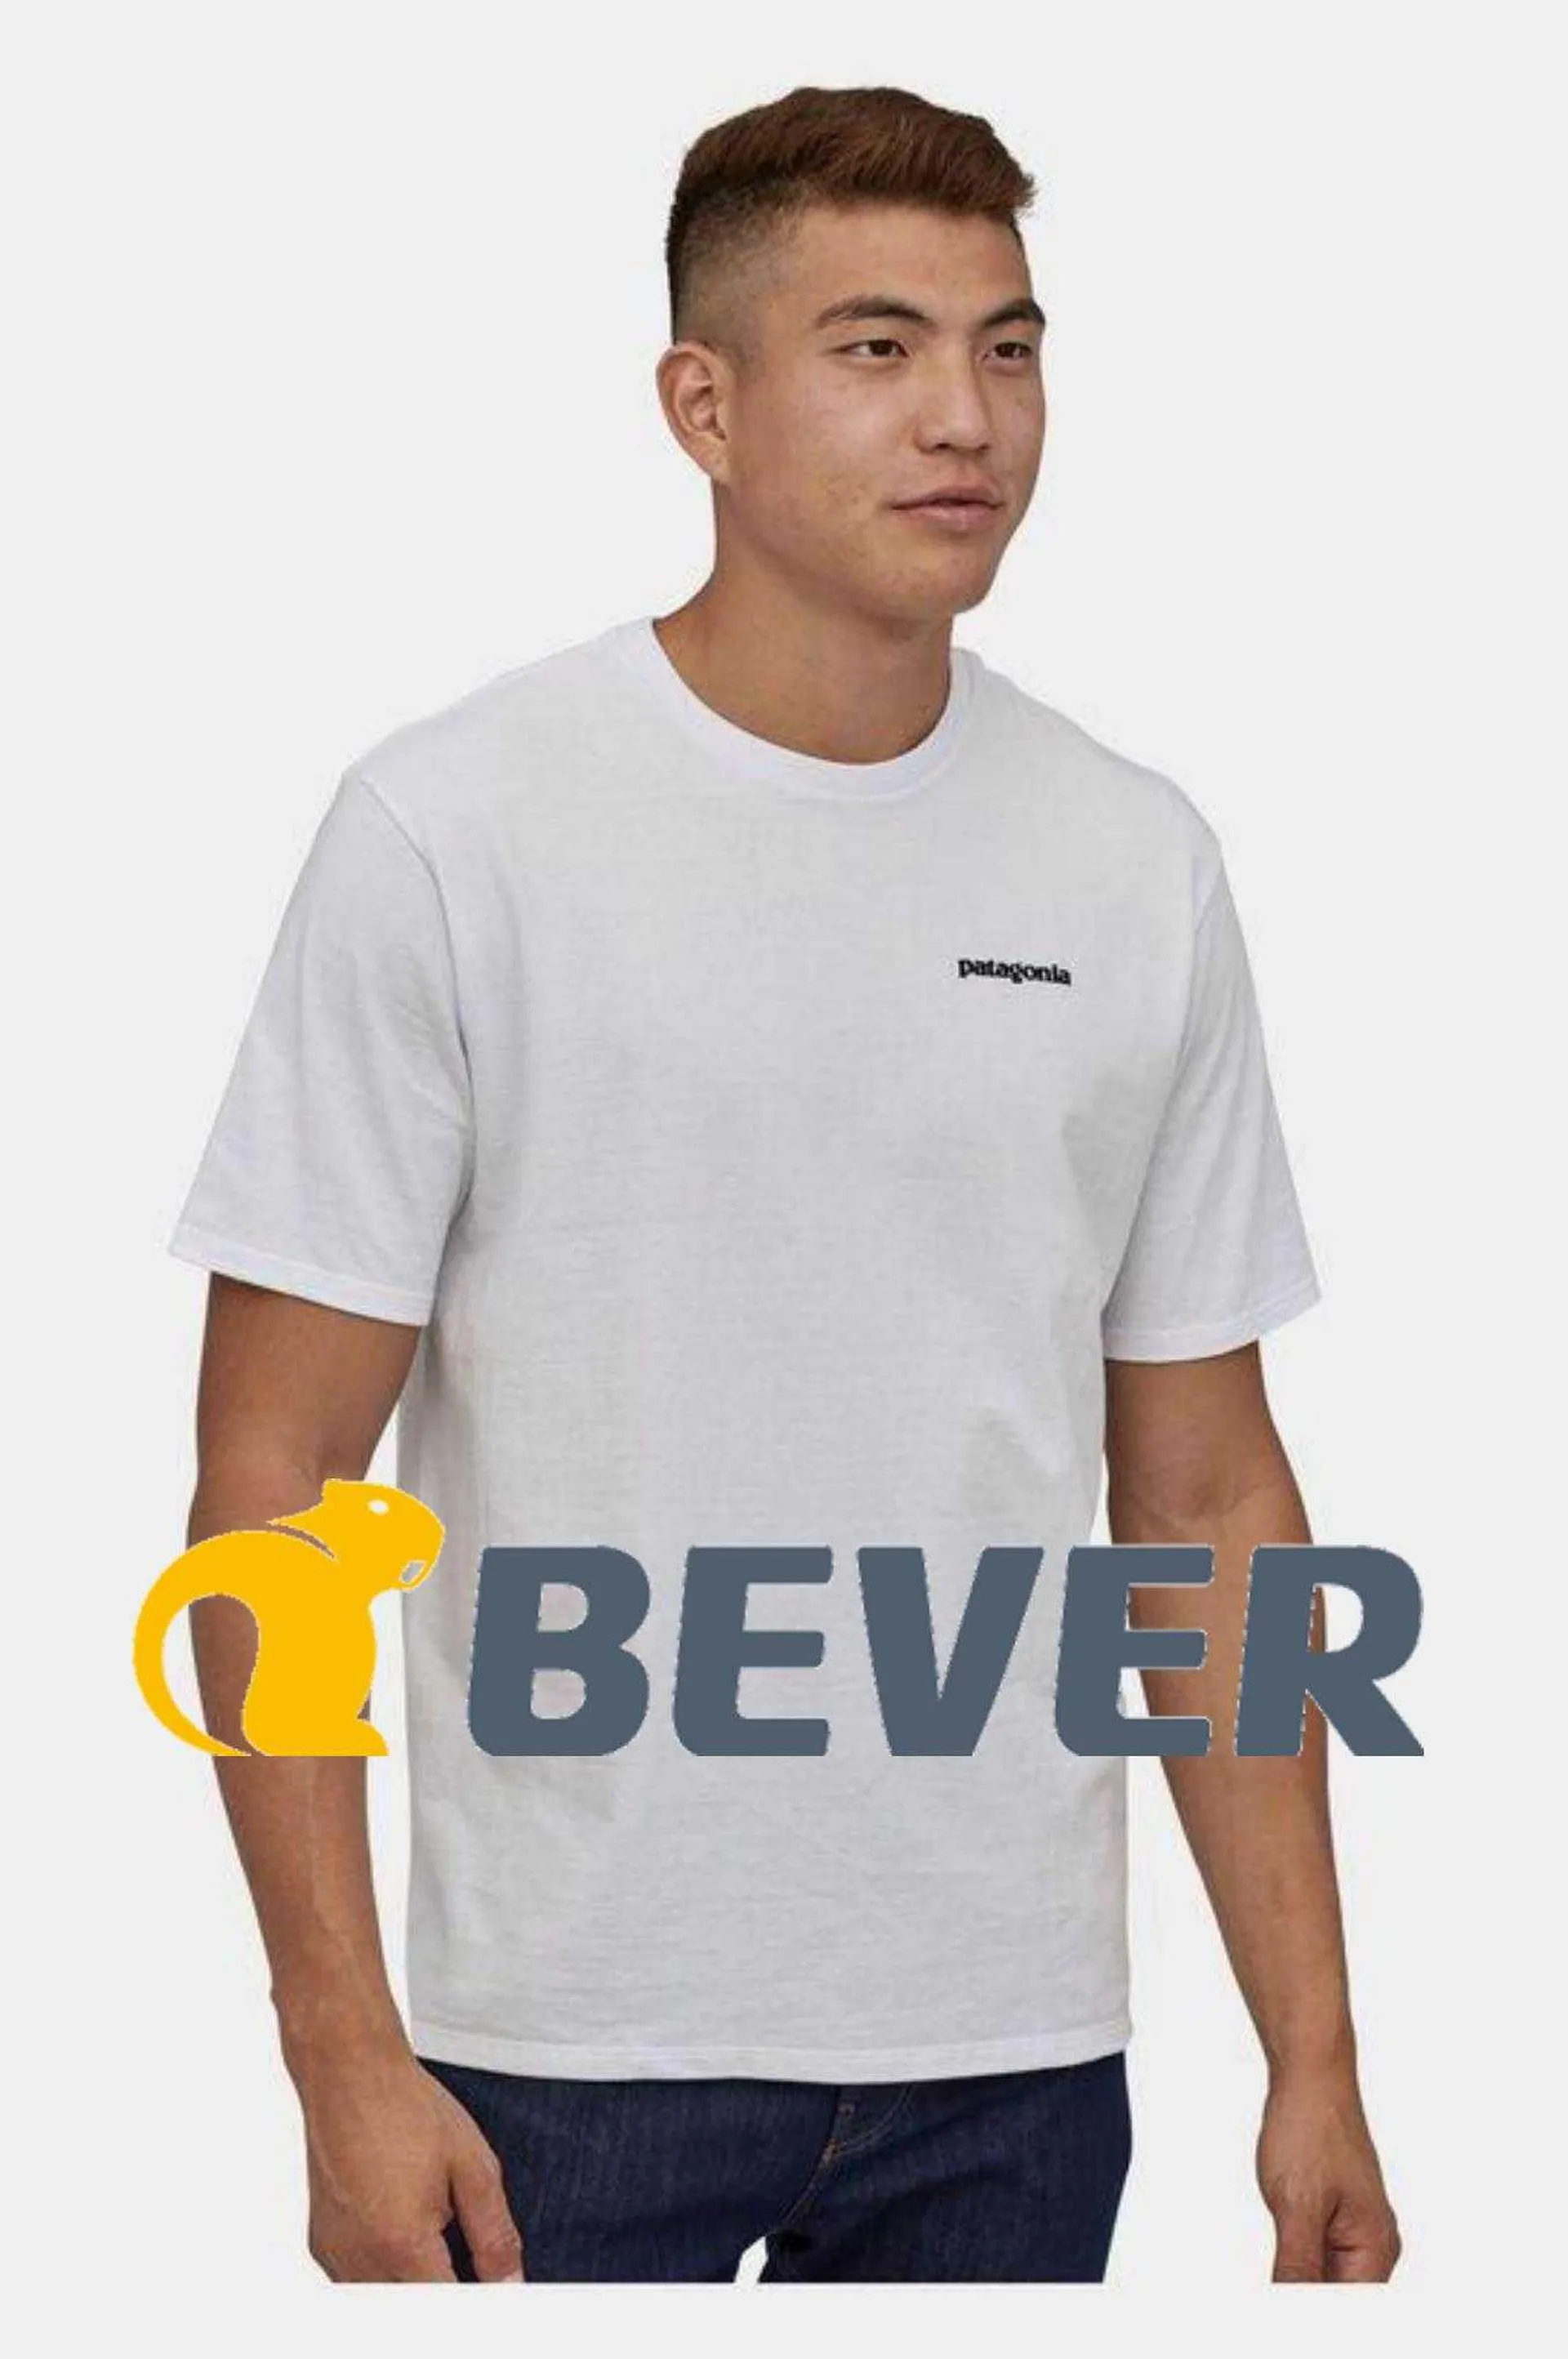 Bever Folder - 1